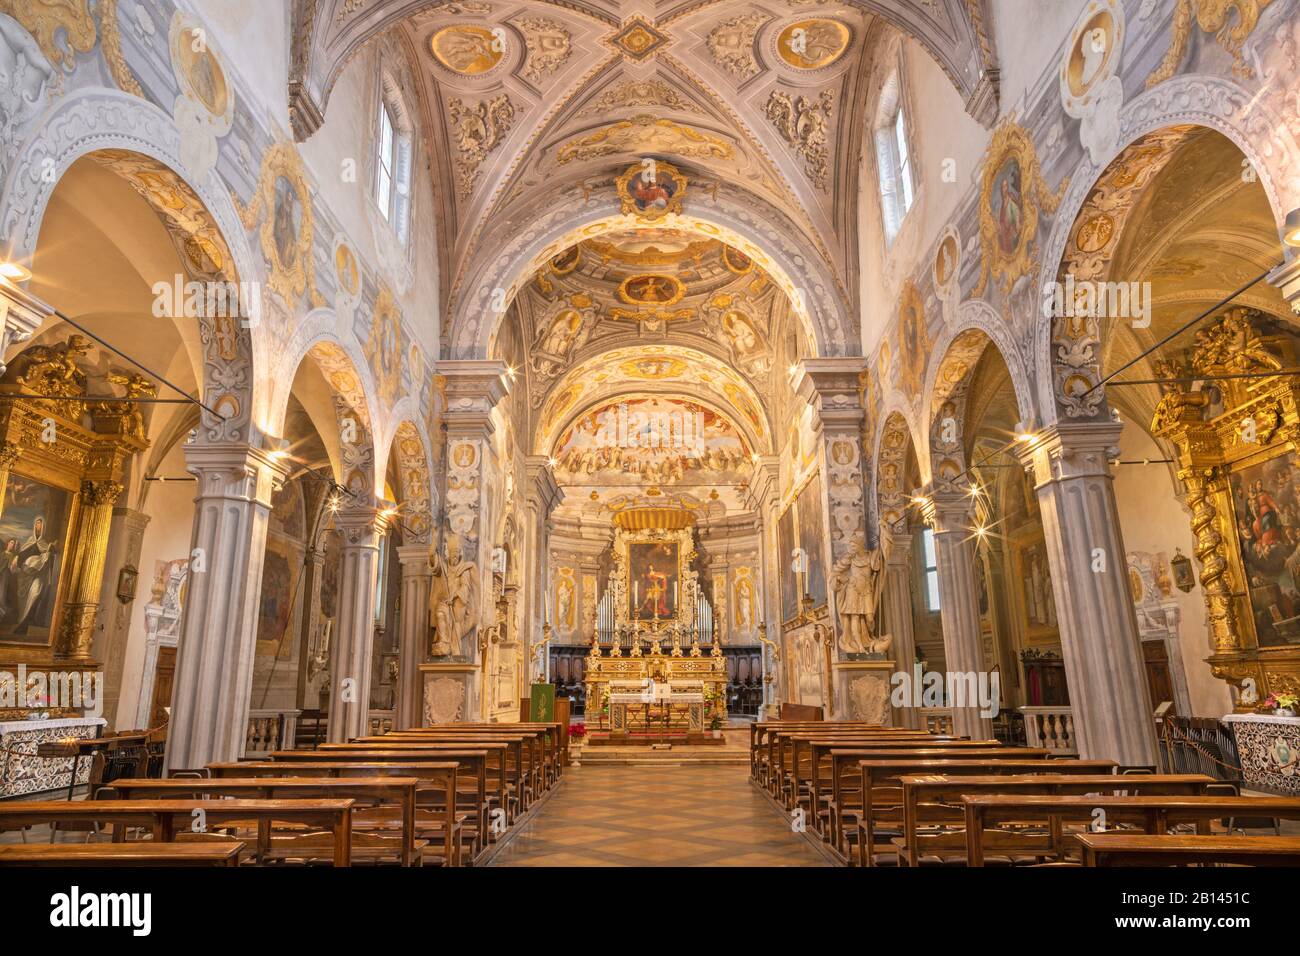 Ferrara, ITALIEN - 30. JANUAR 2020: Das Langhaus der Kirche Basilica di San Giorgio fuori le mura von Francesco Ferrari 18 Cent. Stockfoto